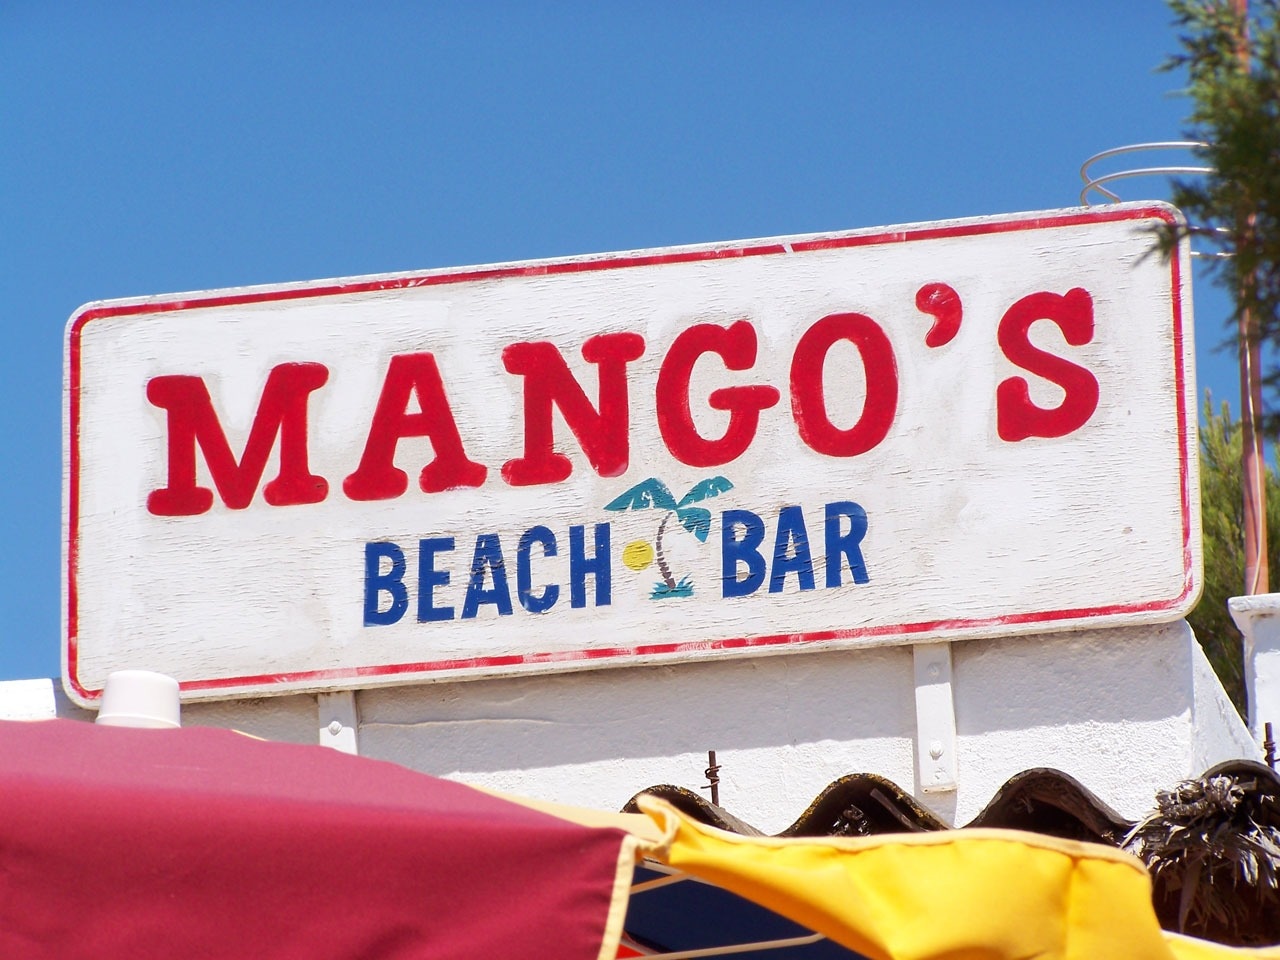 mango's beach bar signage